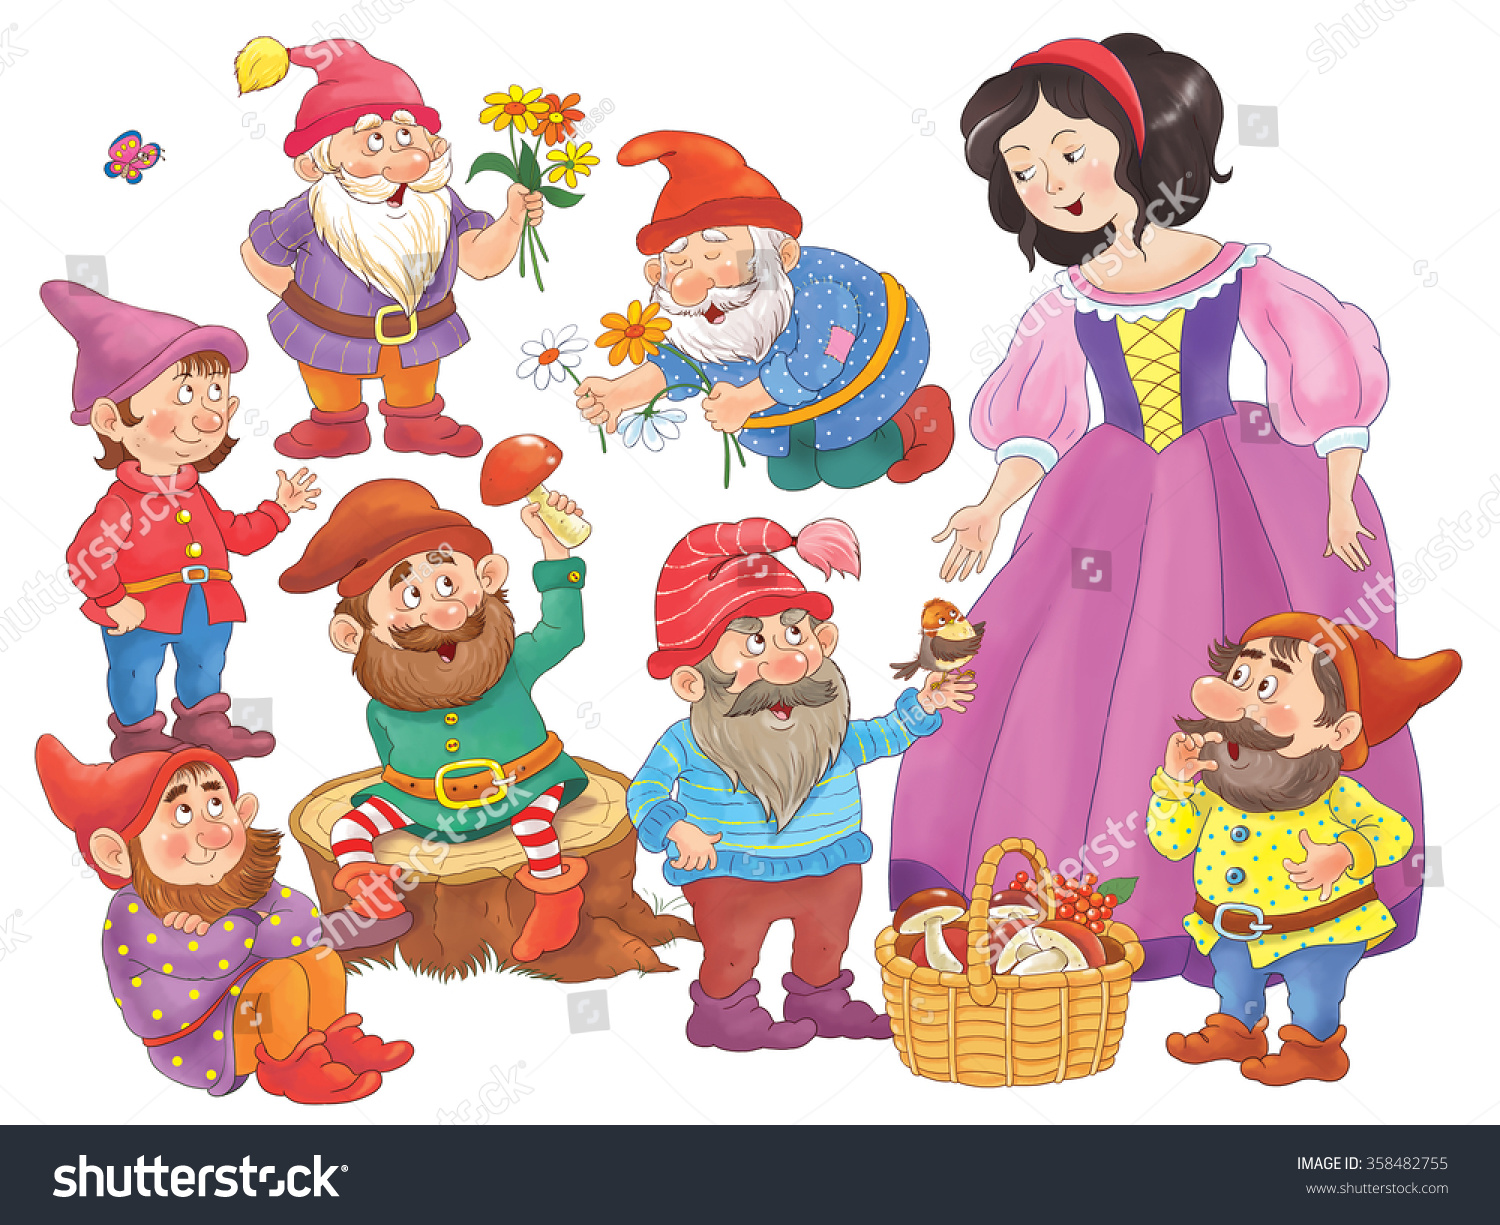 Snow White Seven Dwarfs Fairy Tale Stock Illustration 358482755 ...